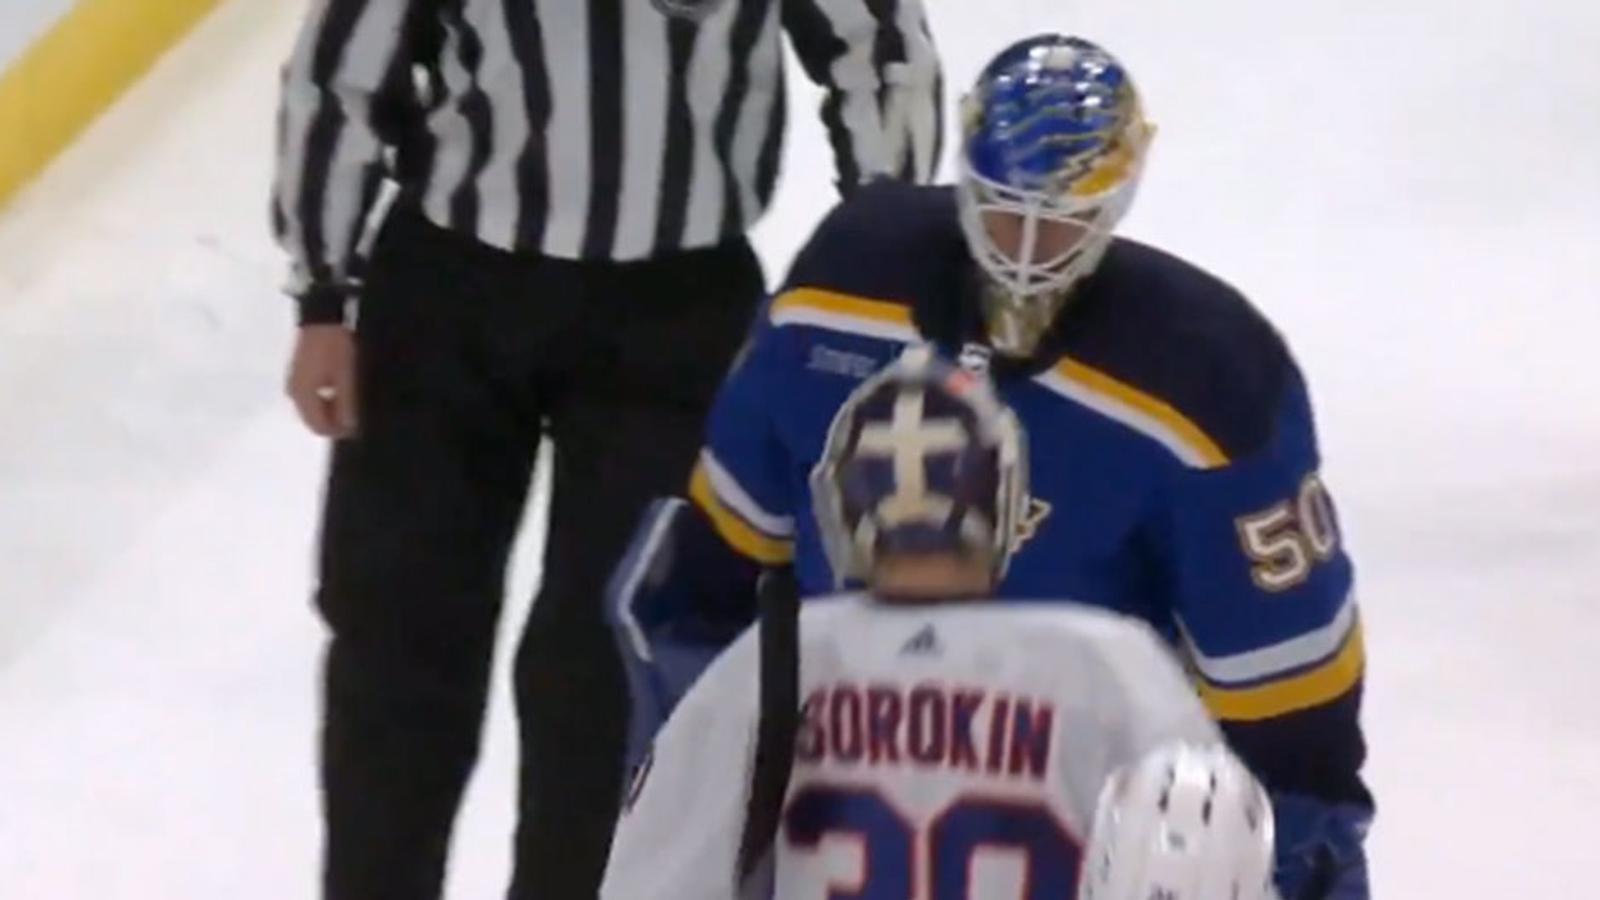 Jordan Binnington hits Ilya Sorokin with a legit body check as they head off the ice